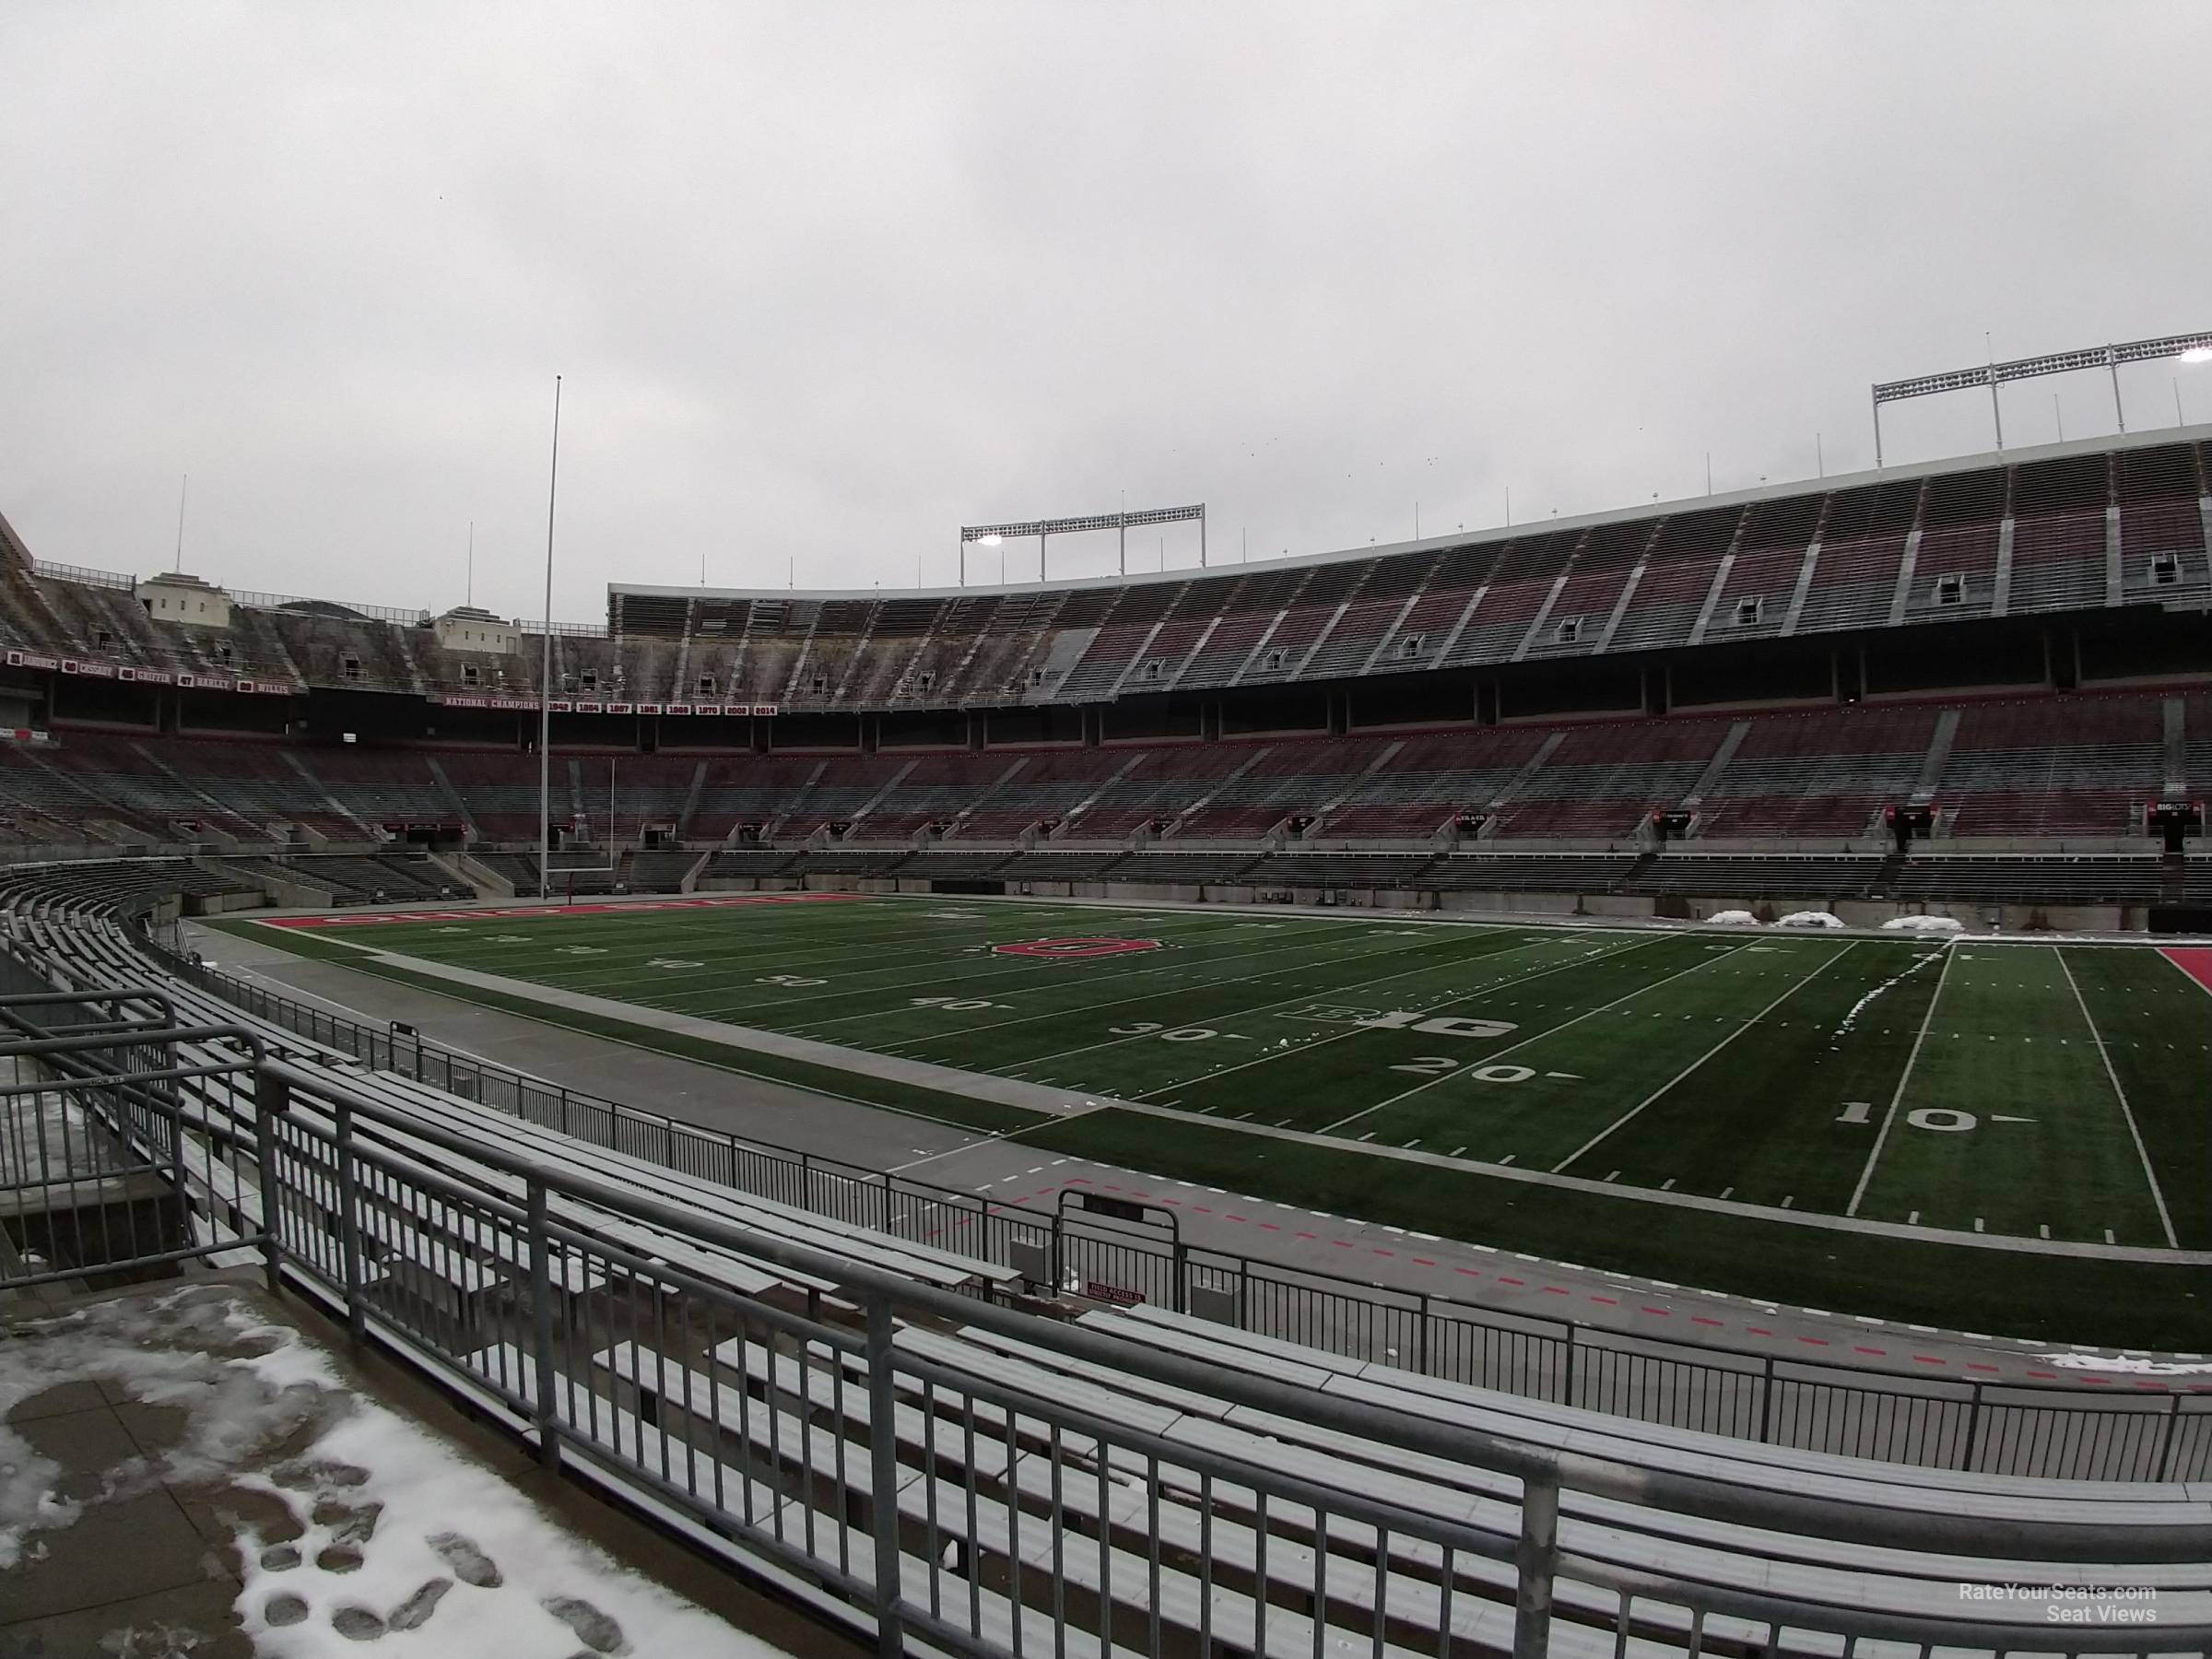 section 25a, row 1 seat view  - ohio stadium